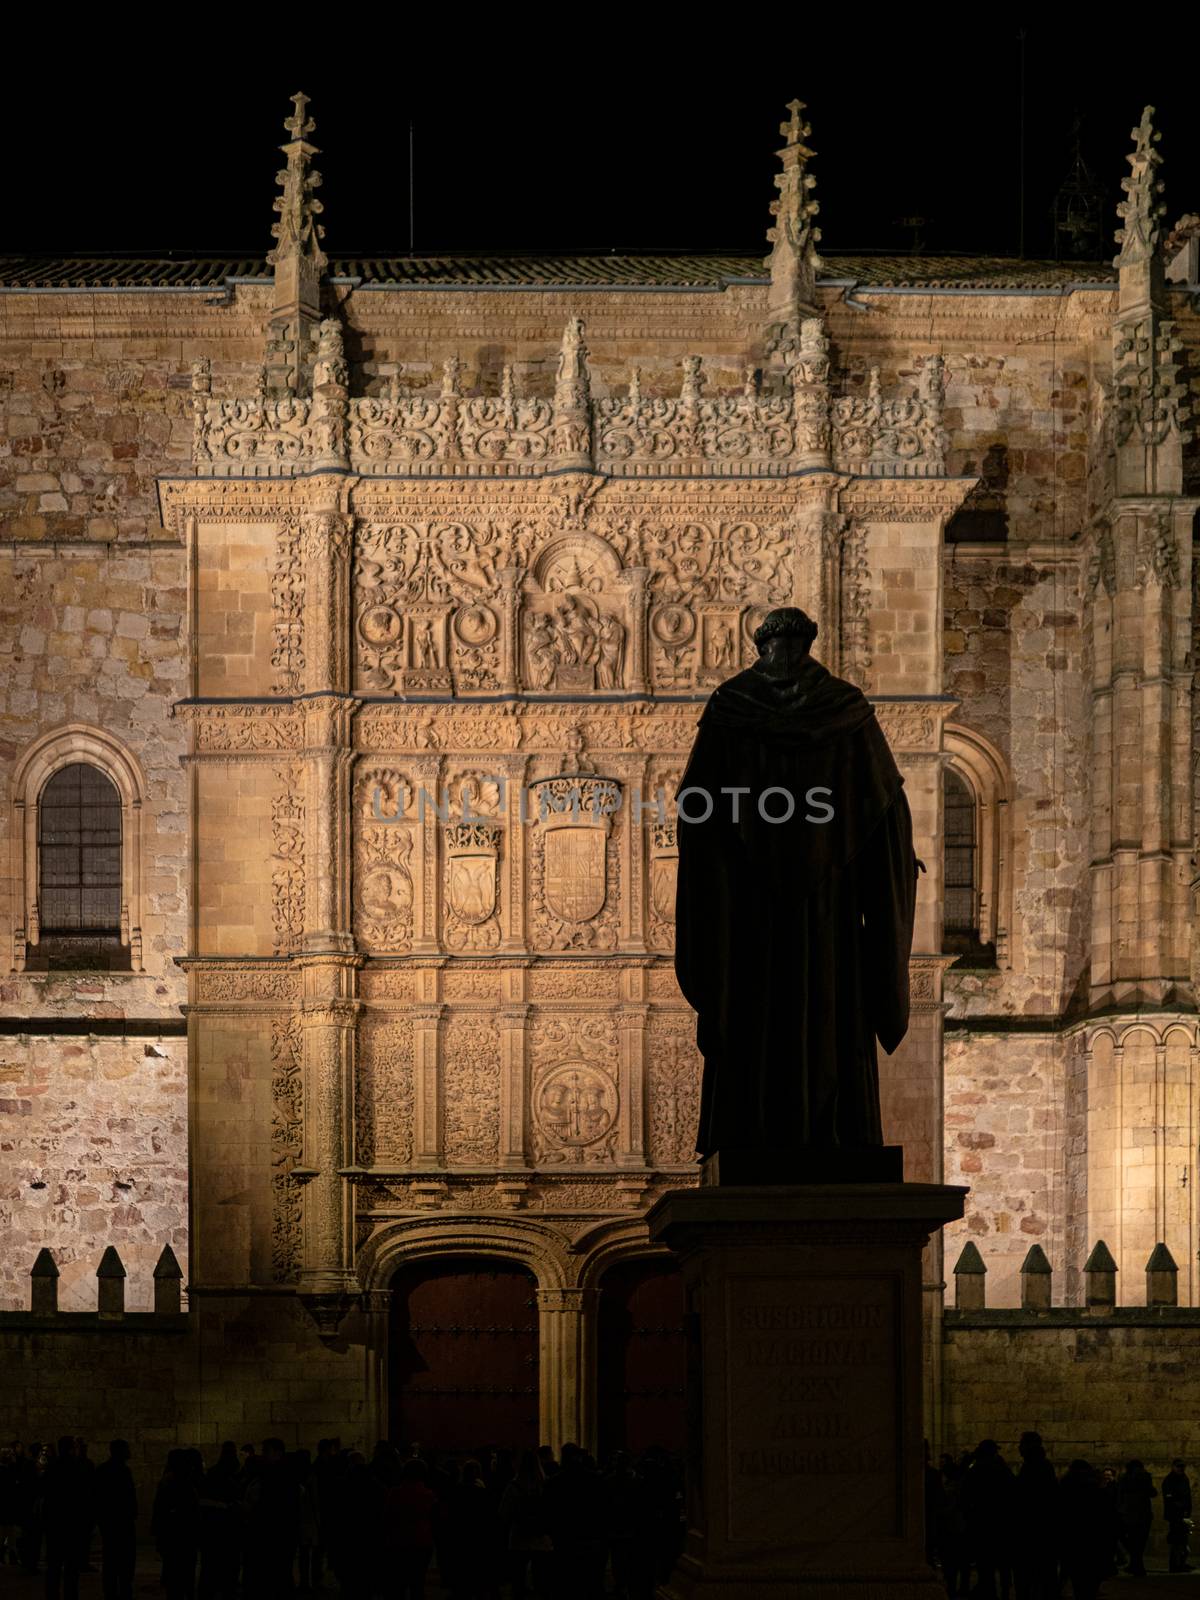 night image of the University of Salamanca